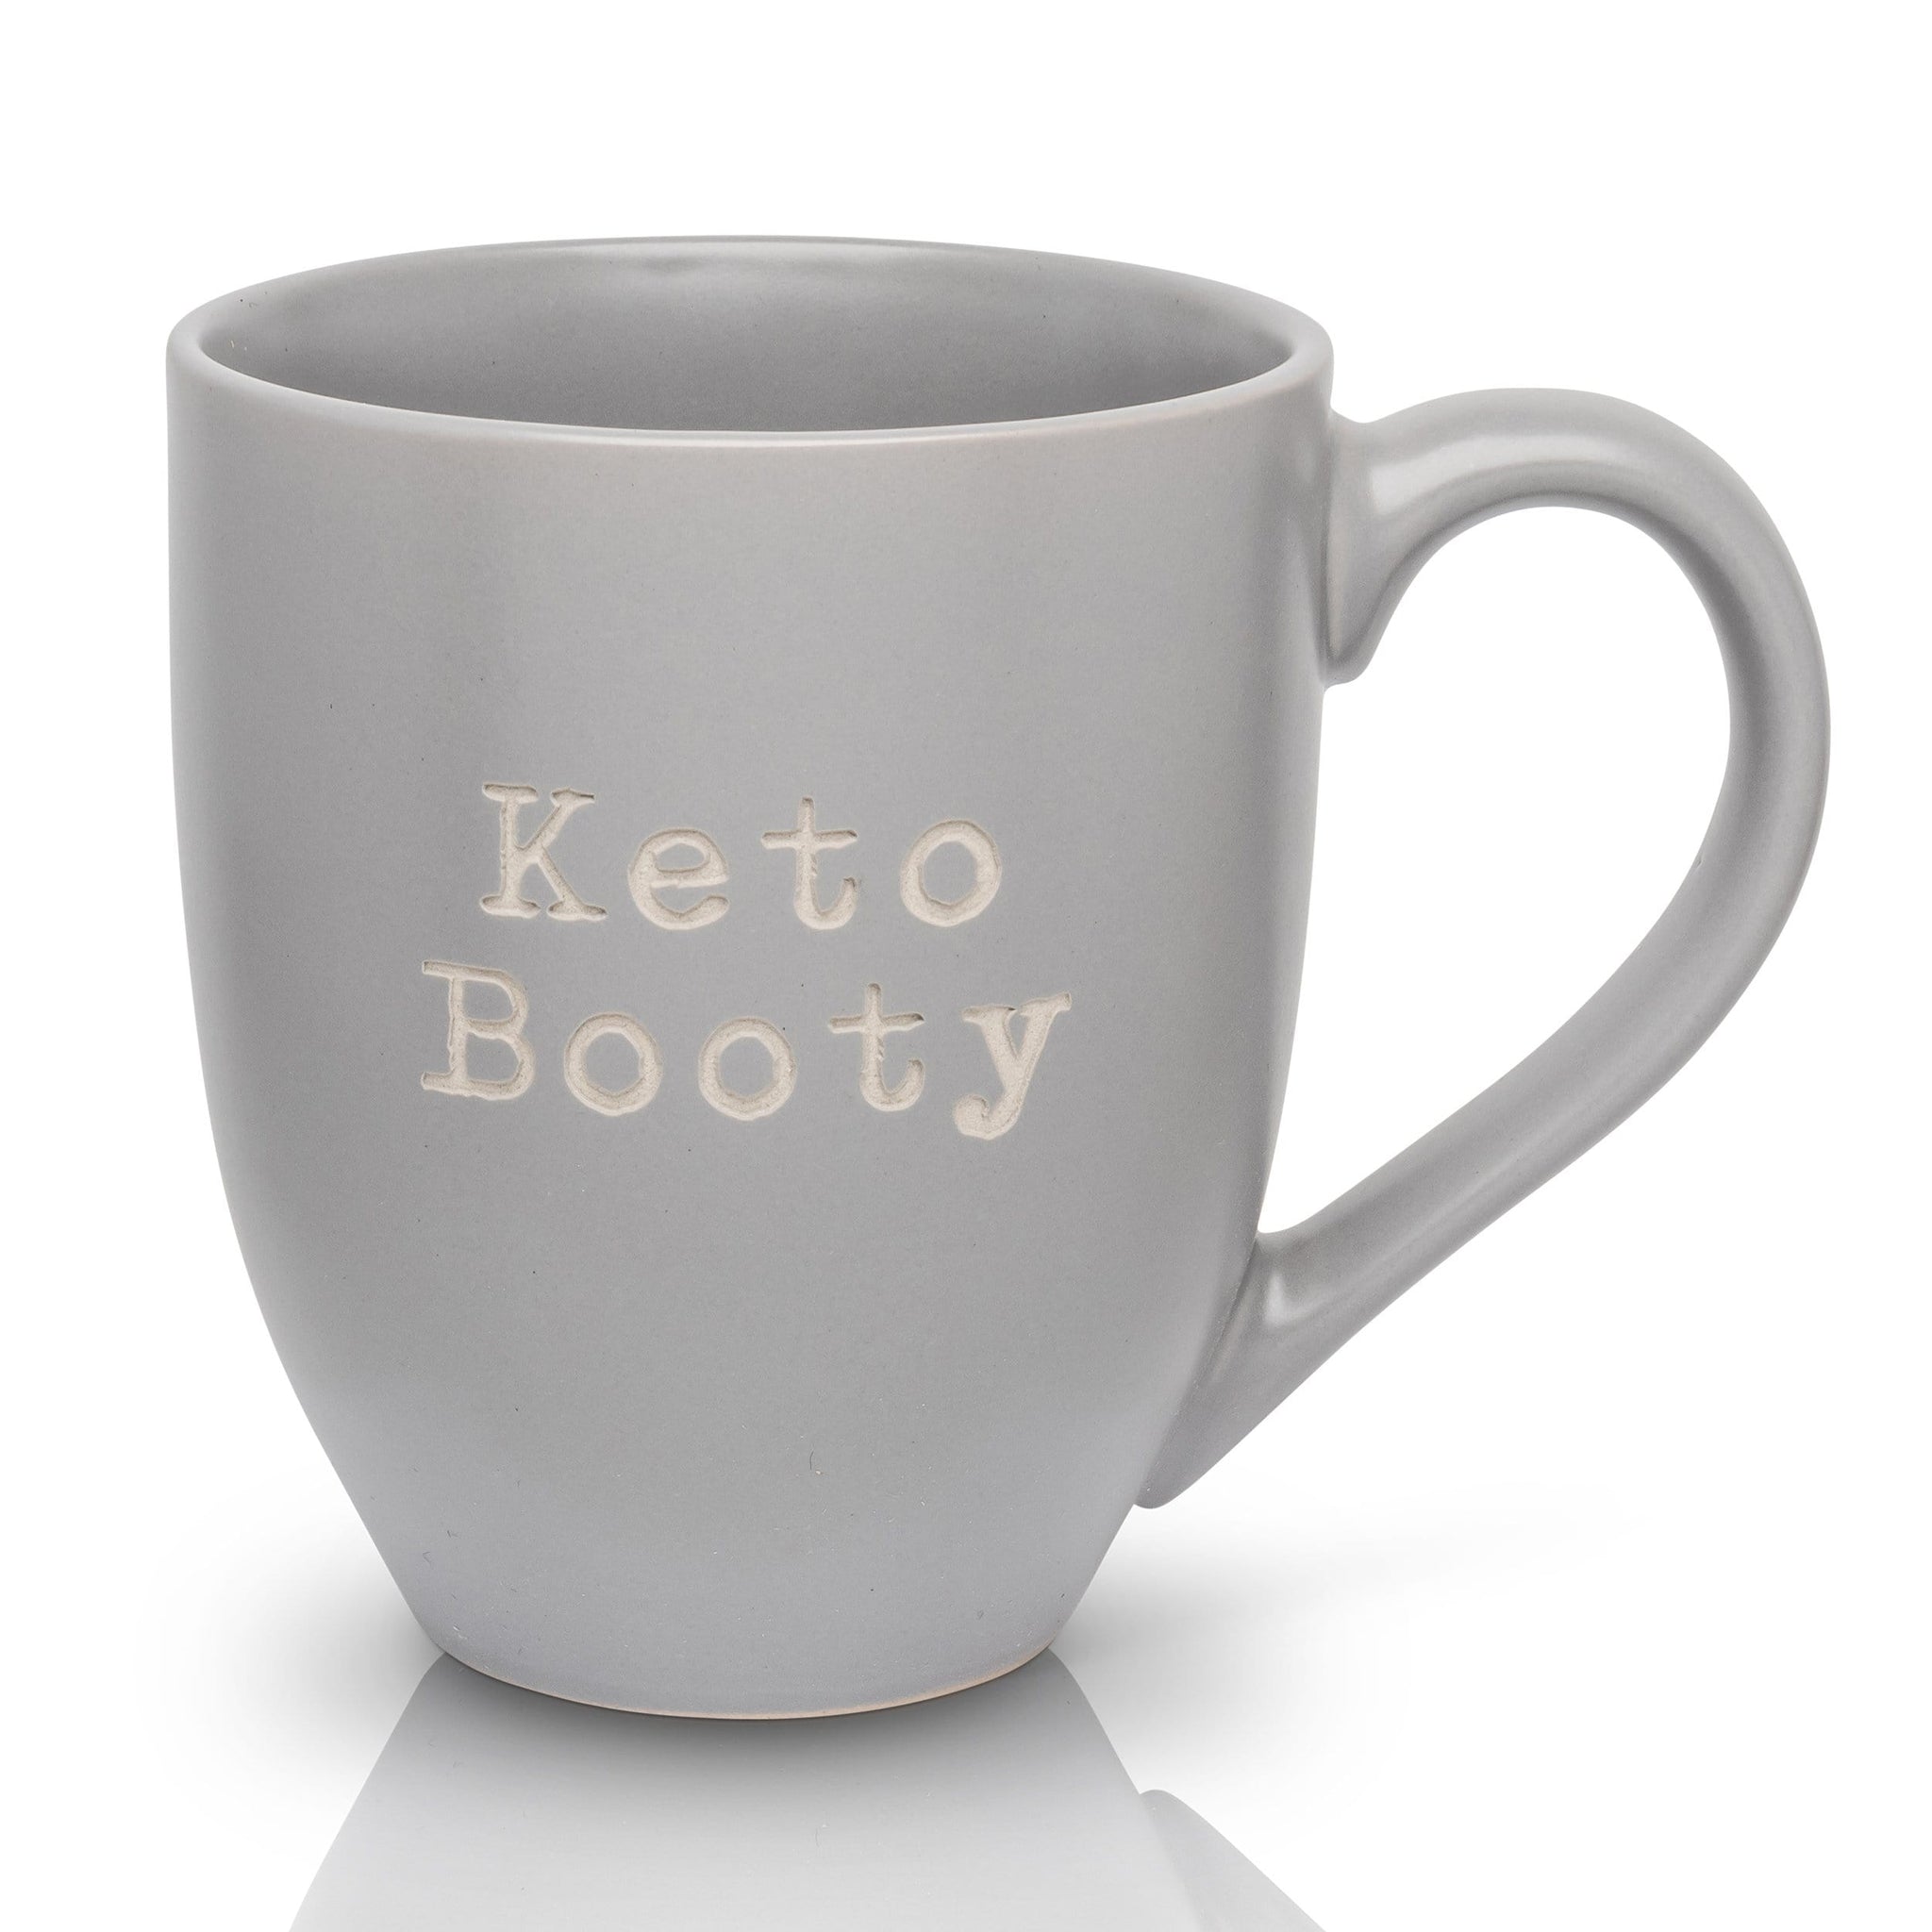 Keto Booty Engraved Mug